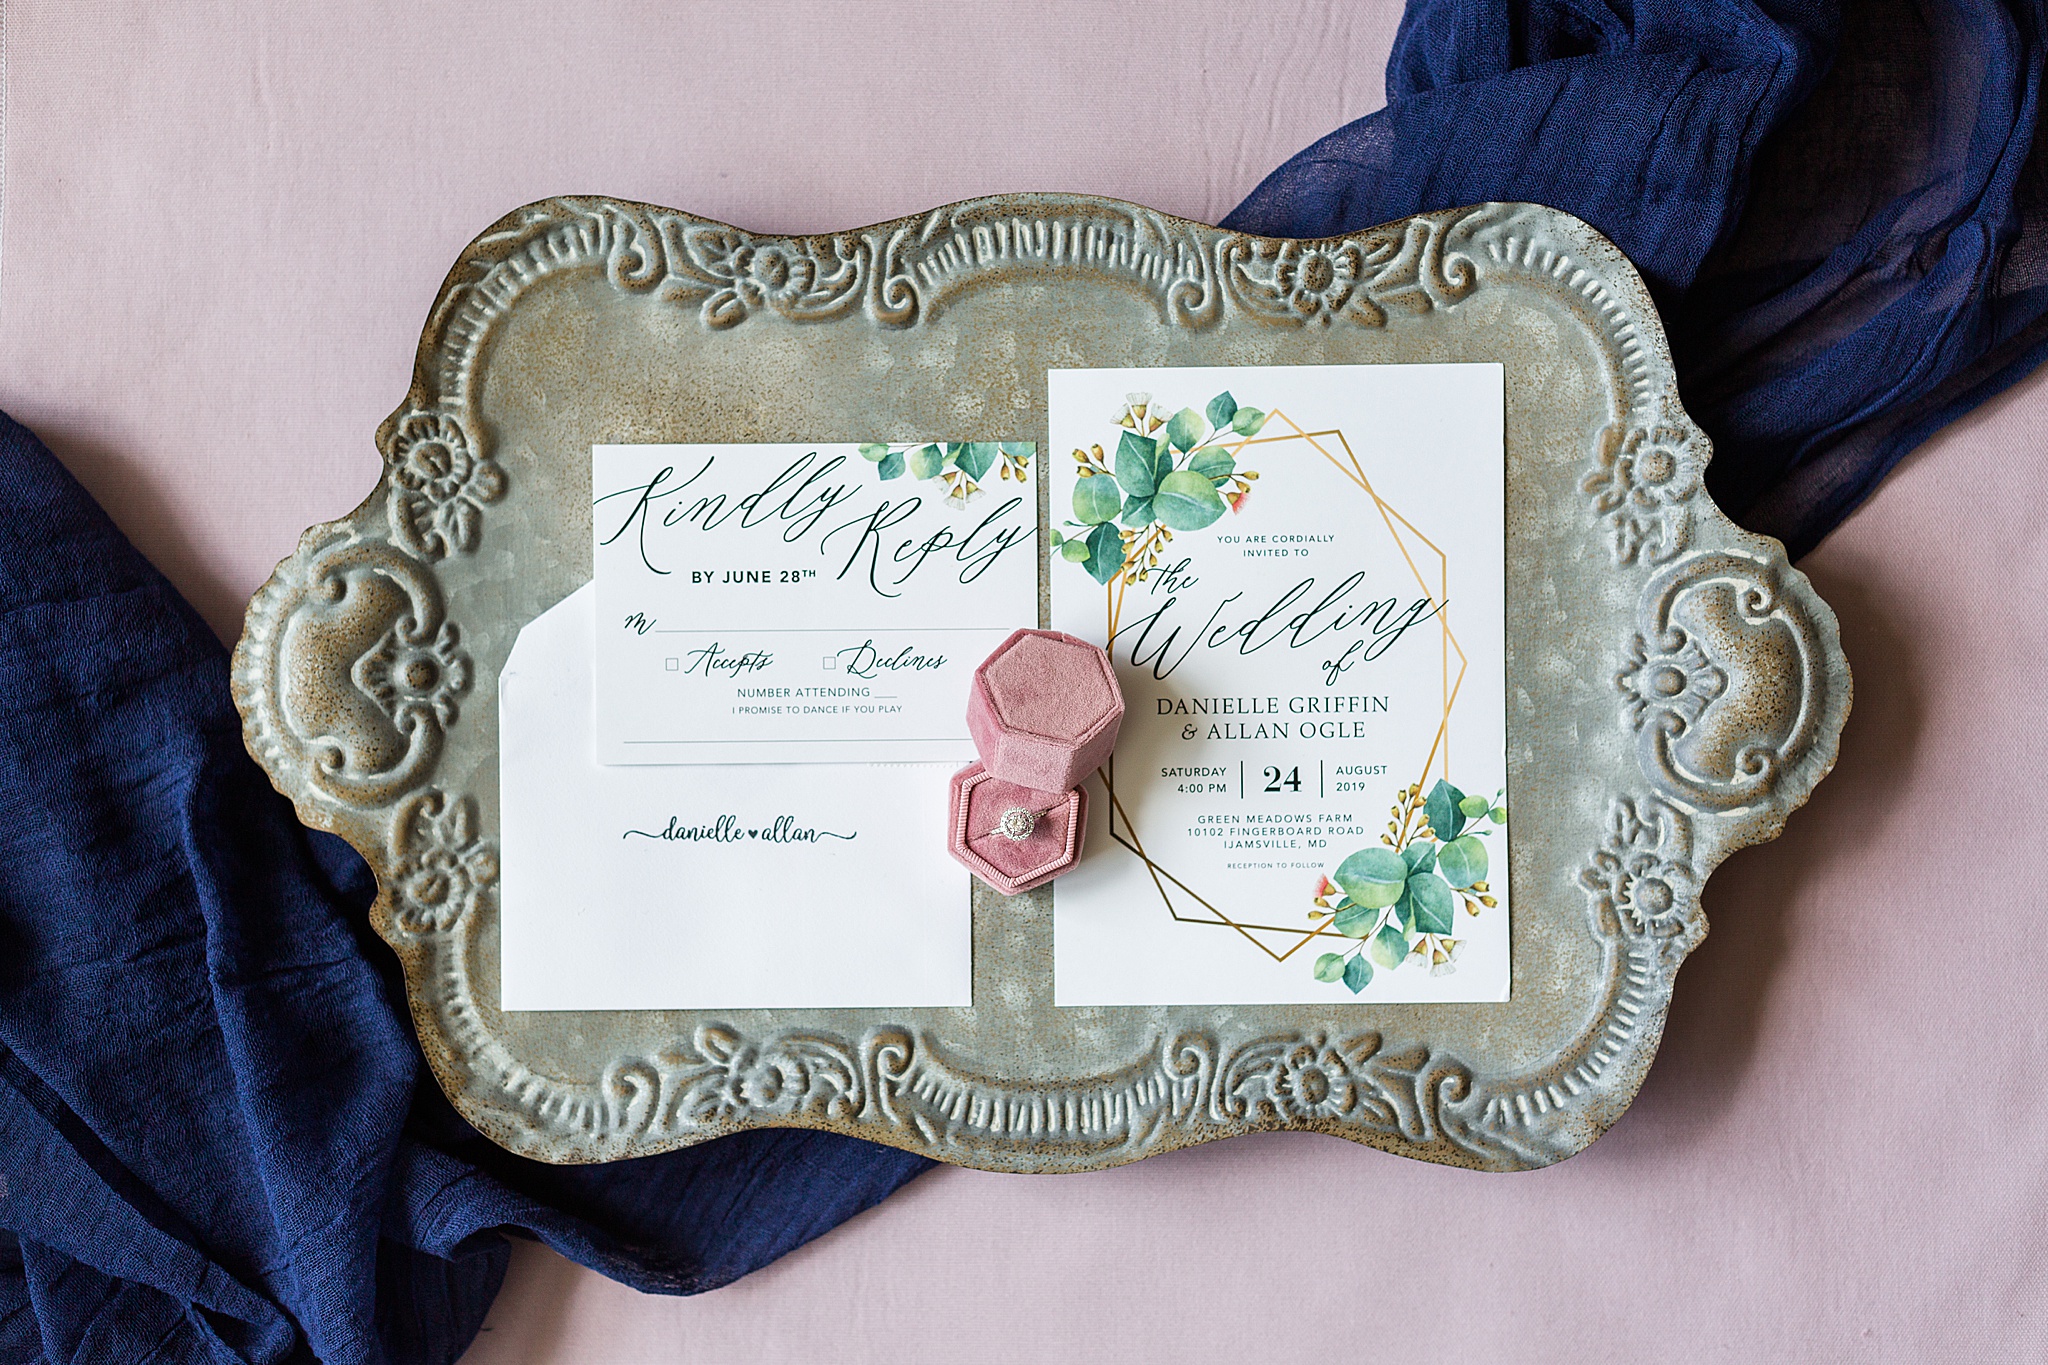 Green Meadows Farm wedding invitations photographed by Alexandra Mandato Photography